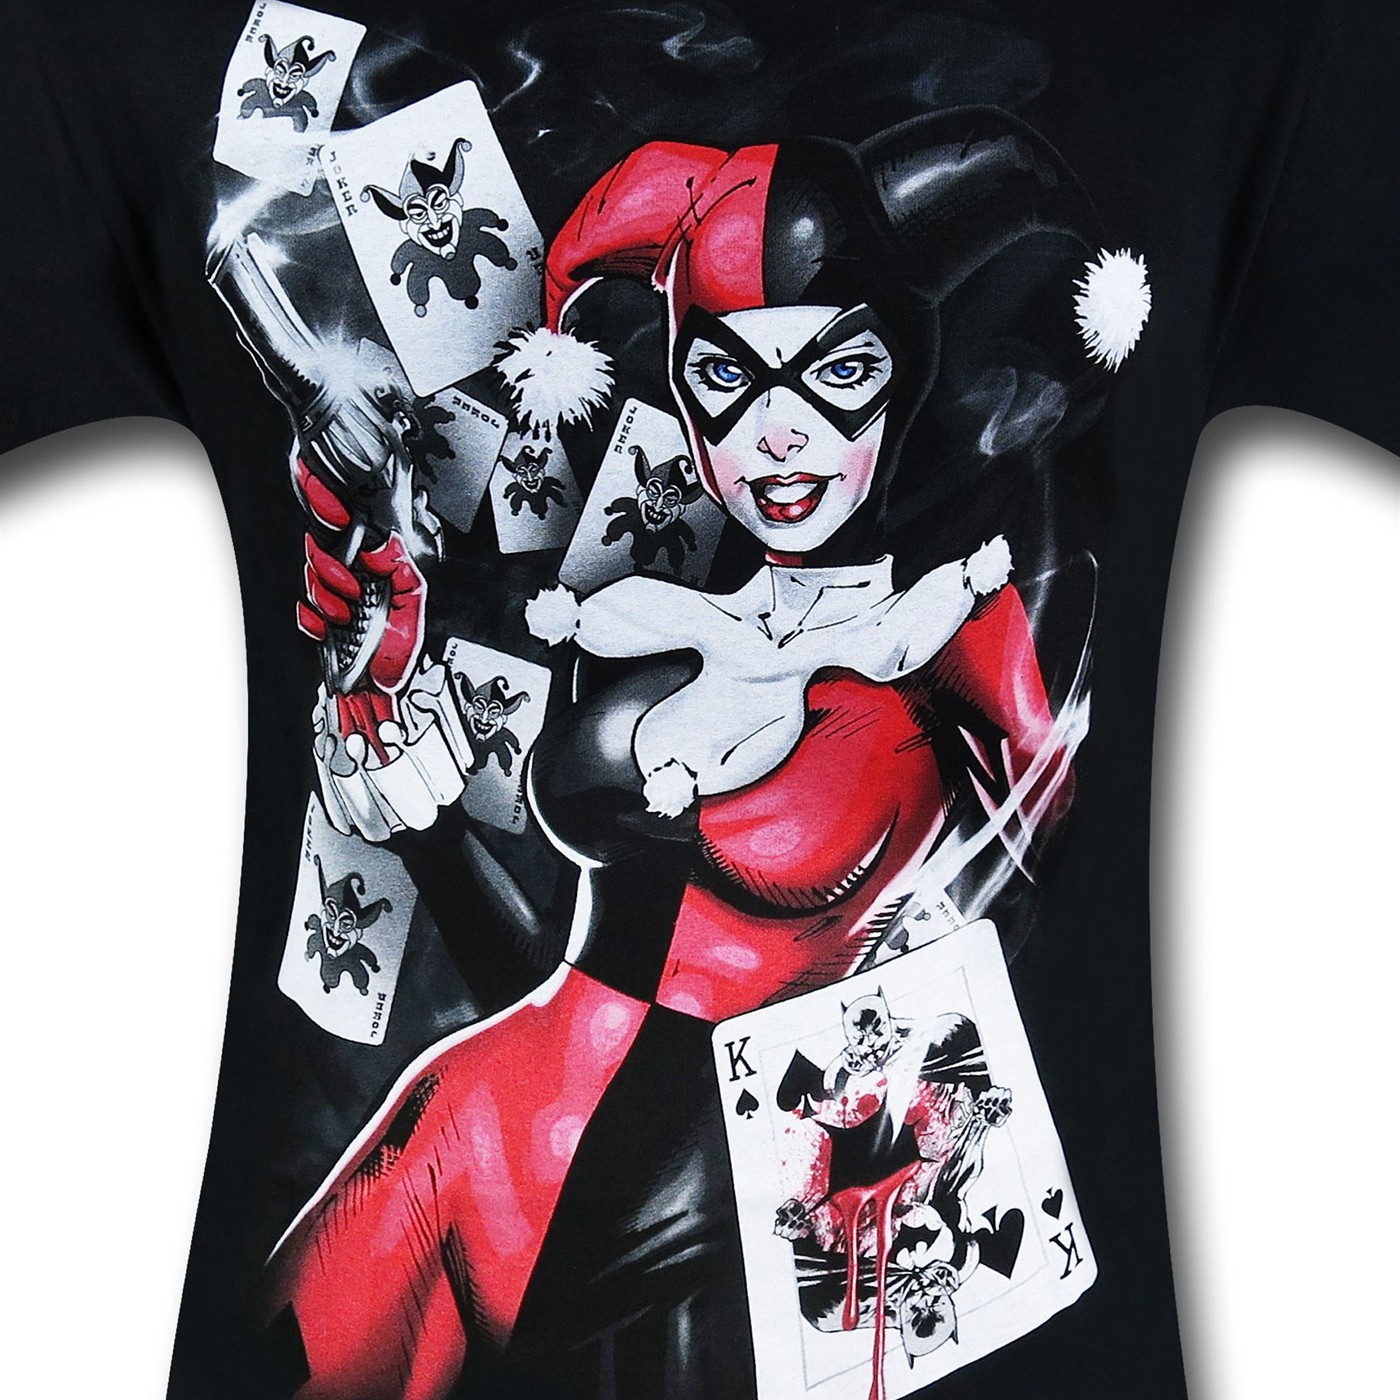 Harley Quinn Card Shot Black T-Shirt